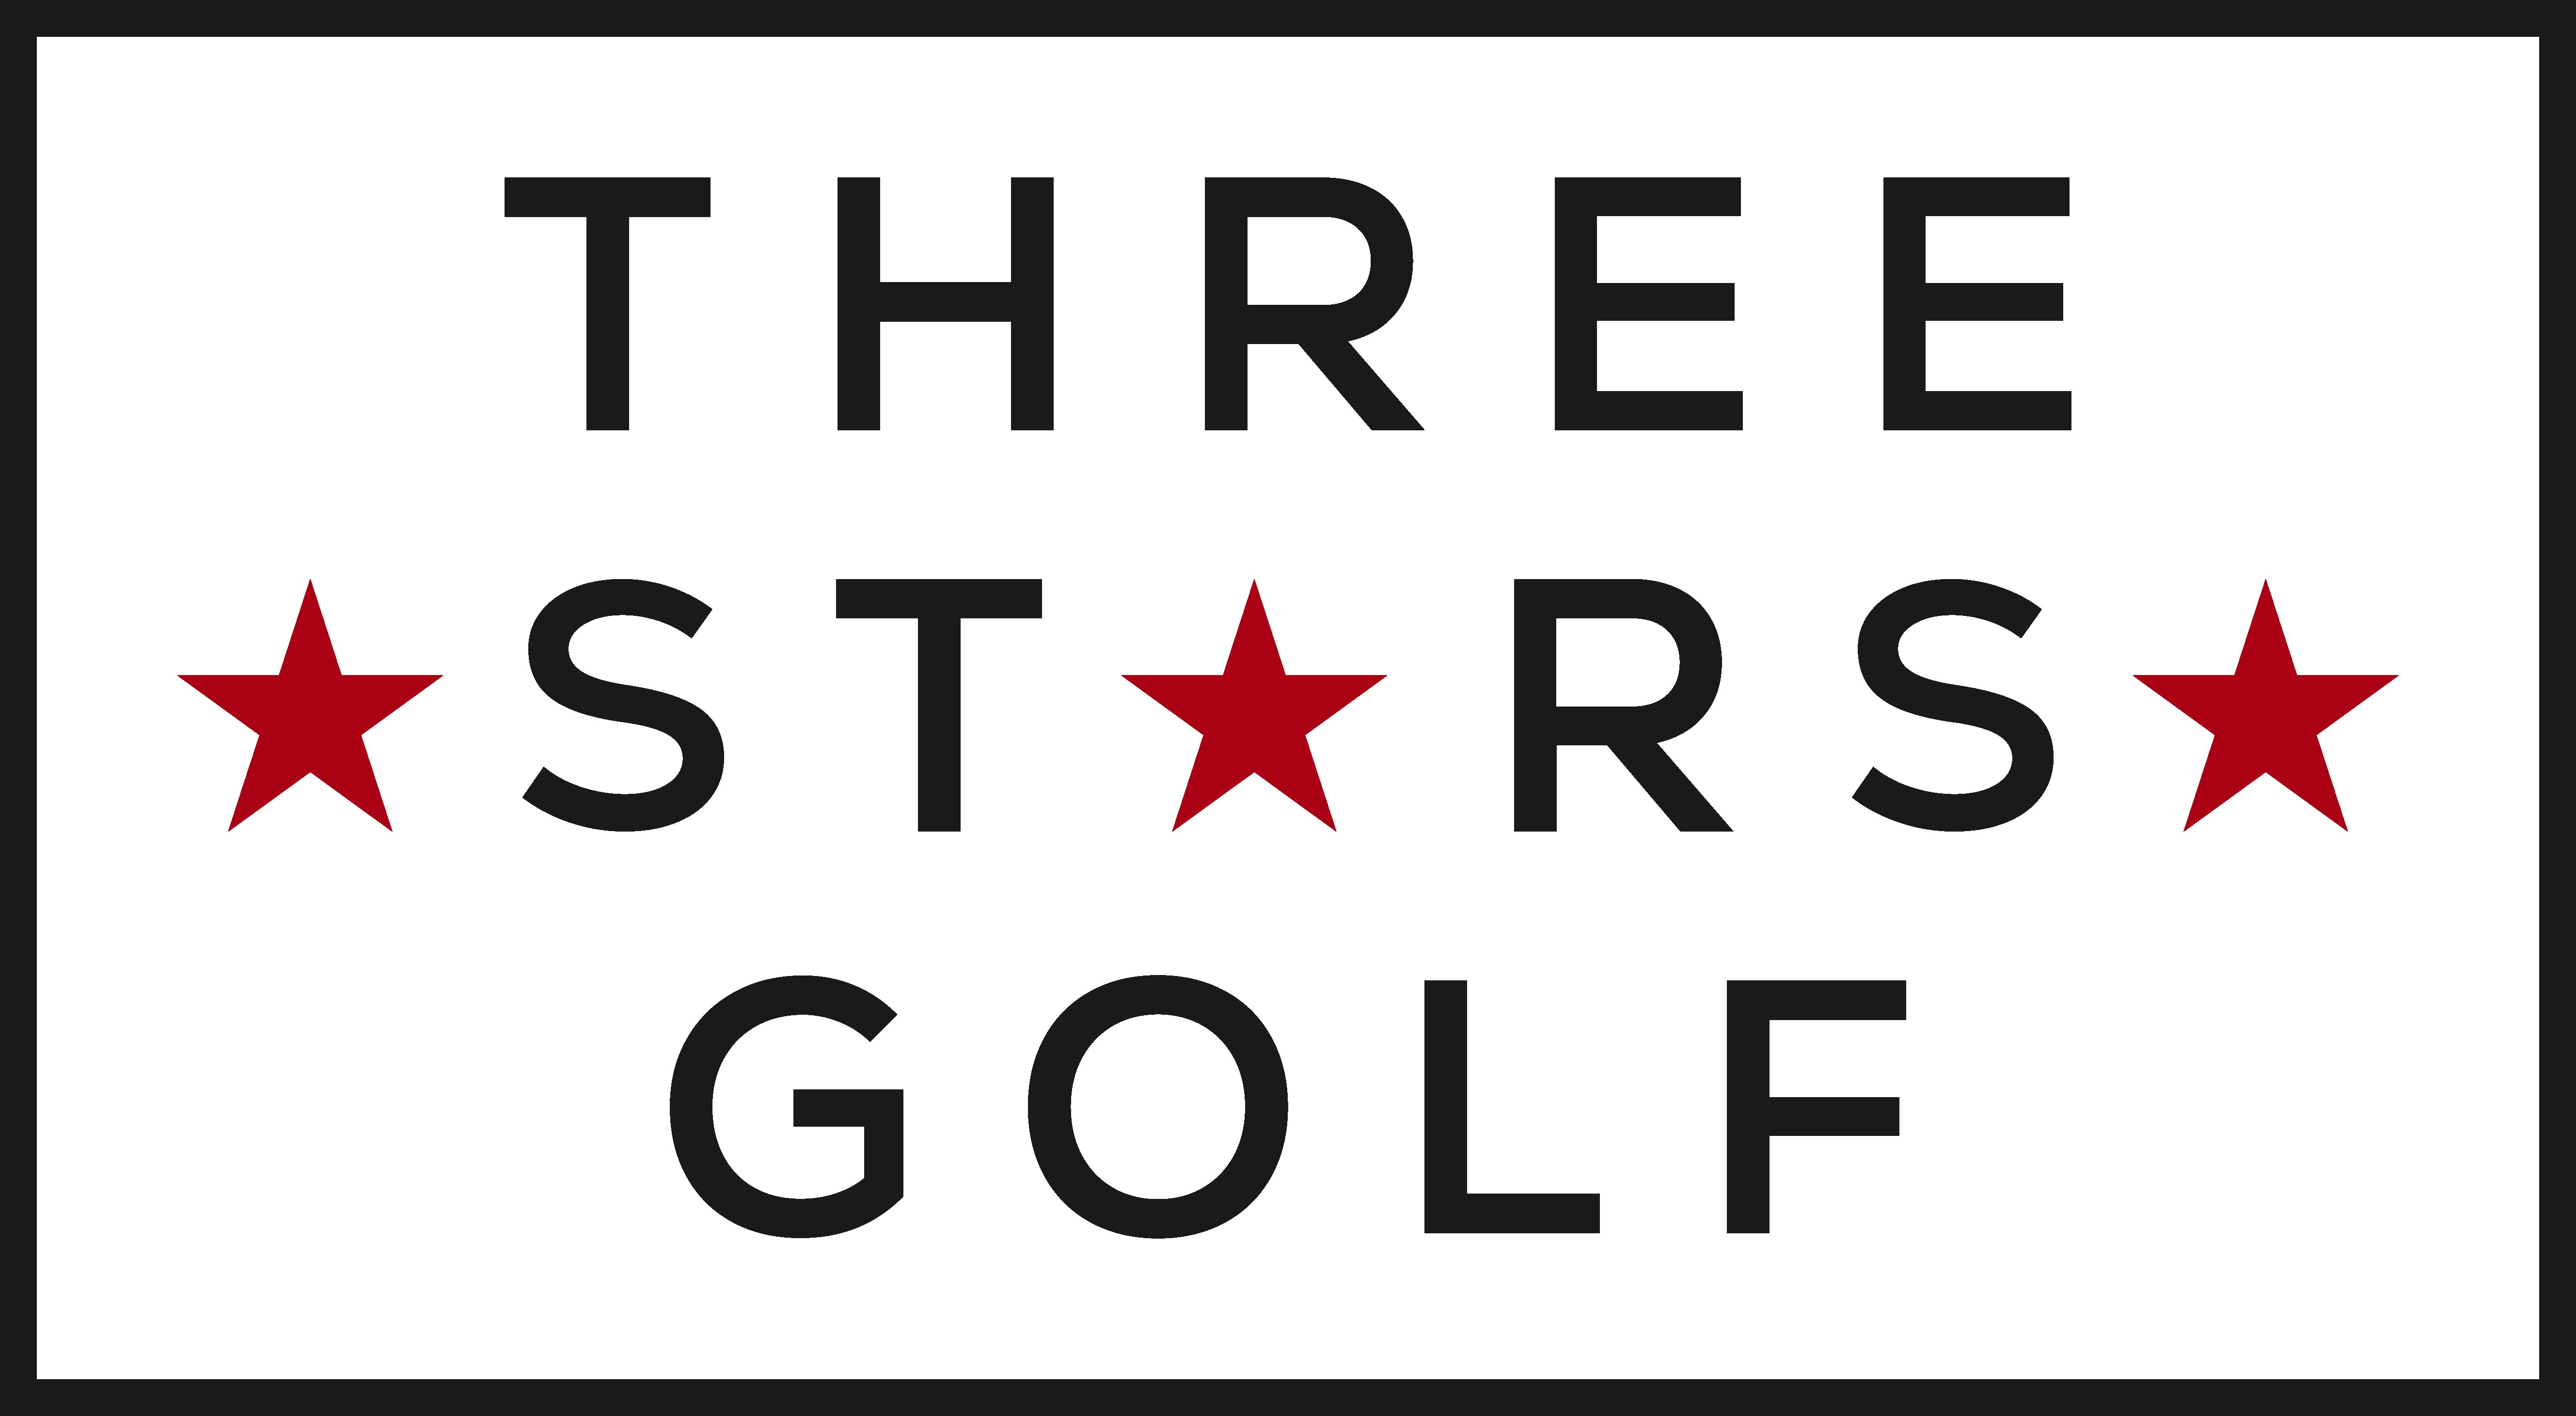 Welcome to Three Stars Golf!